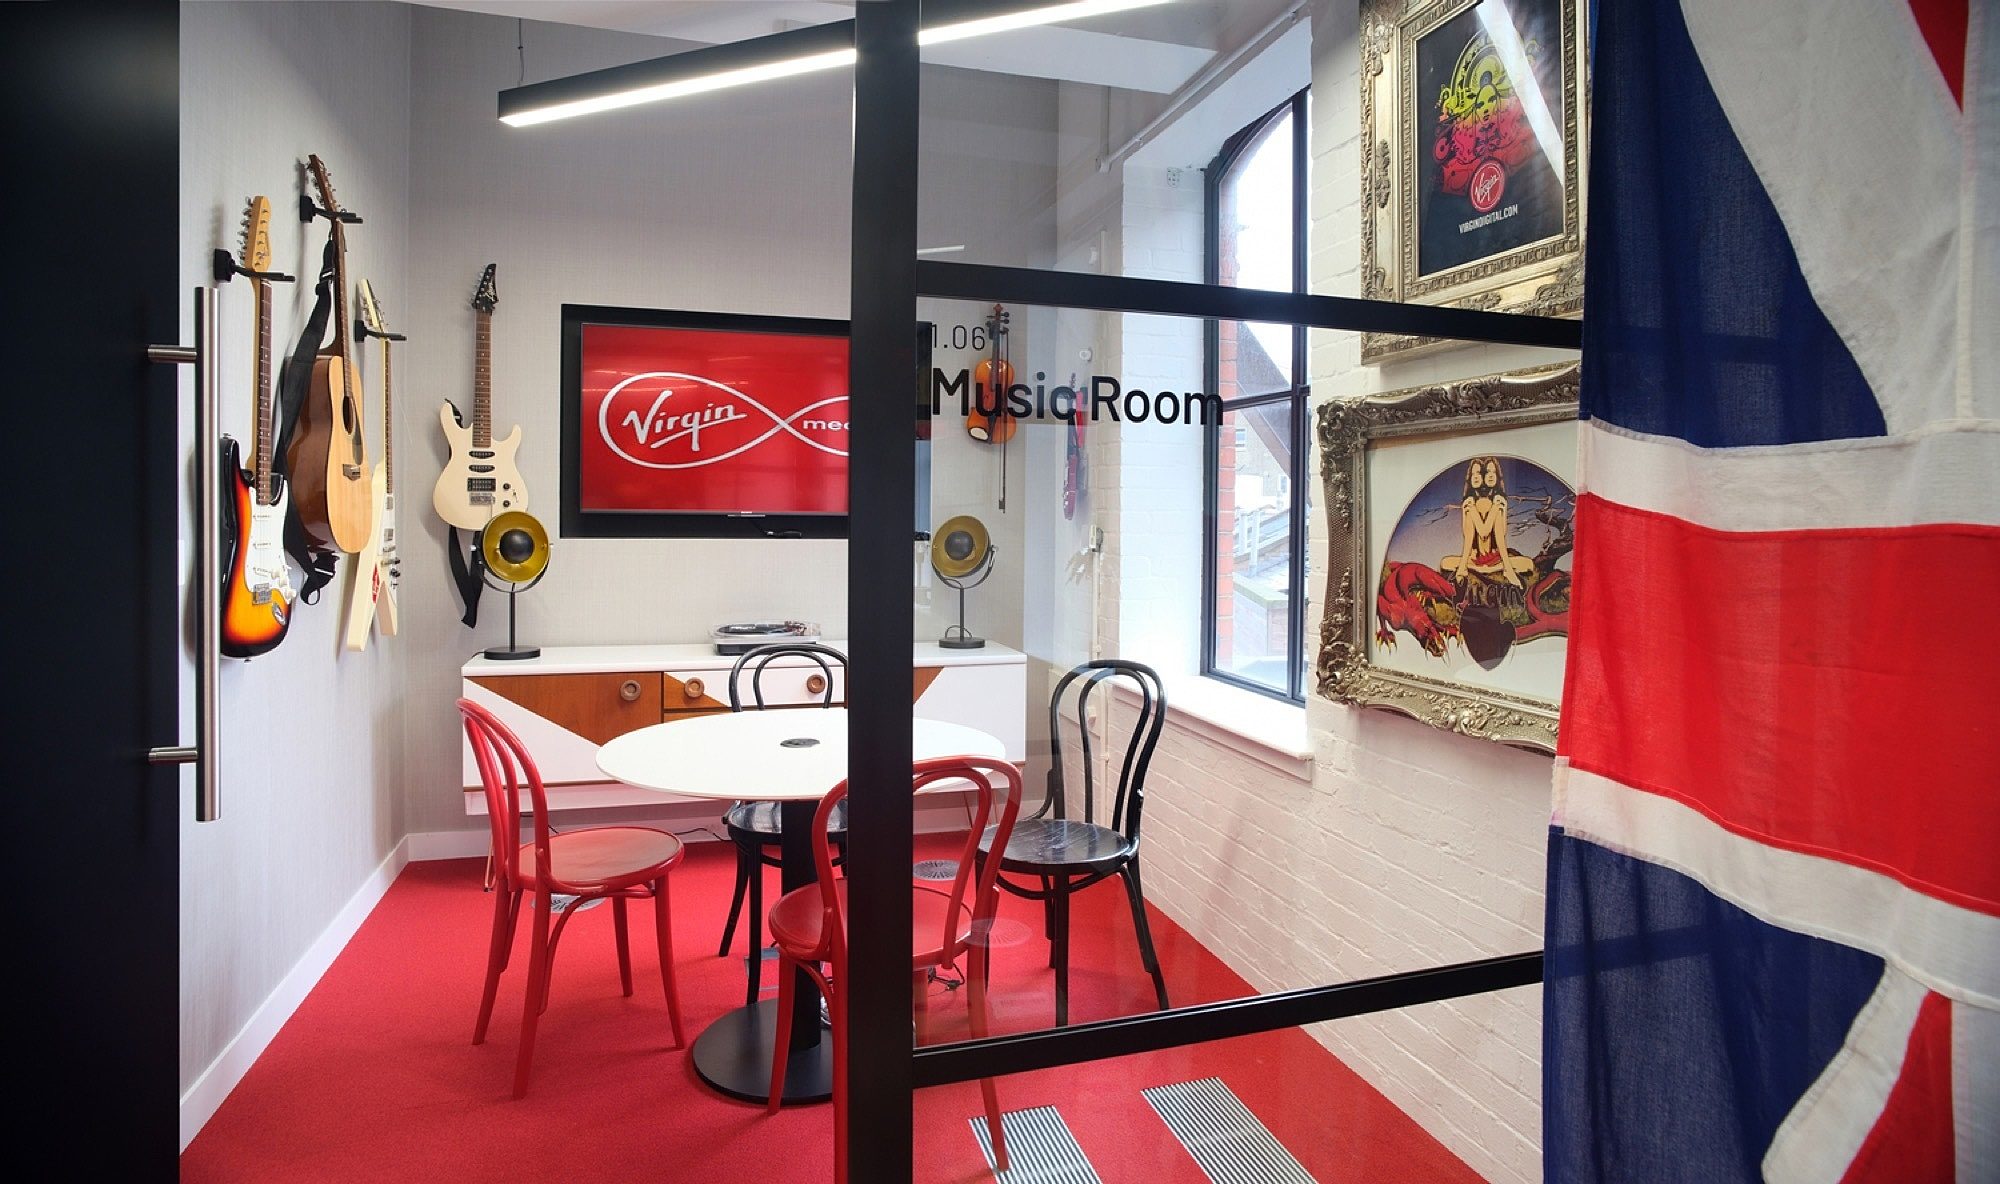 Virgin meeting room design